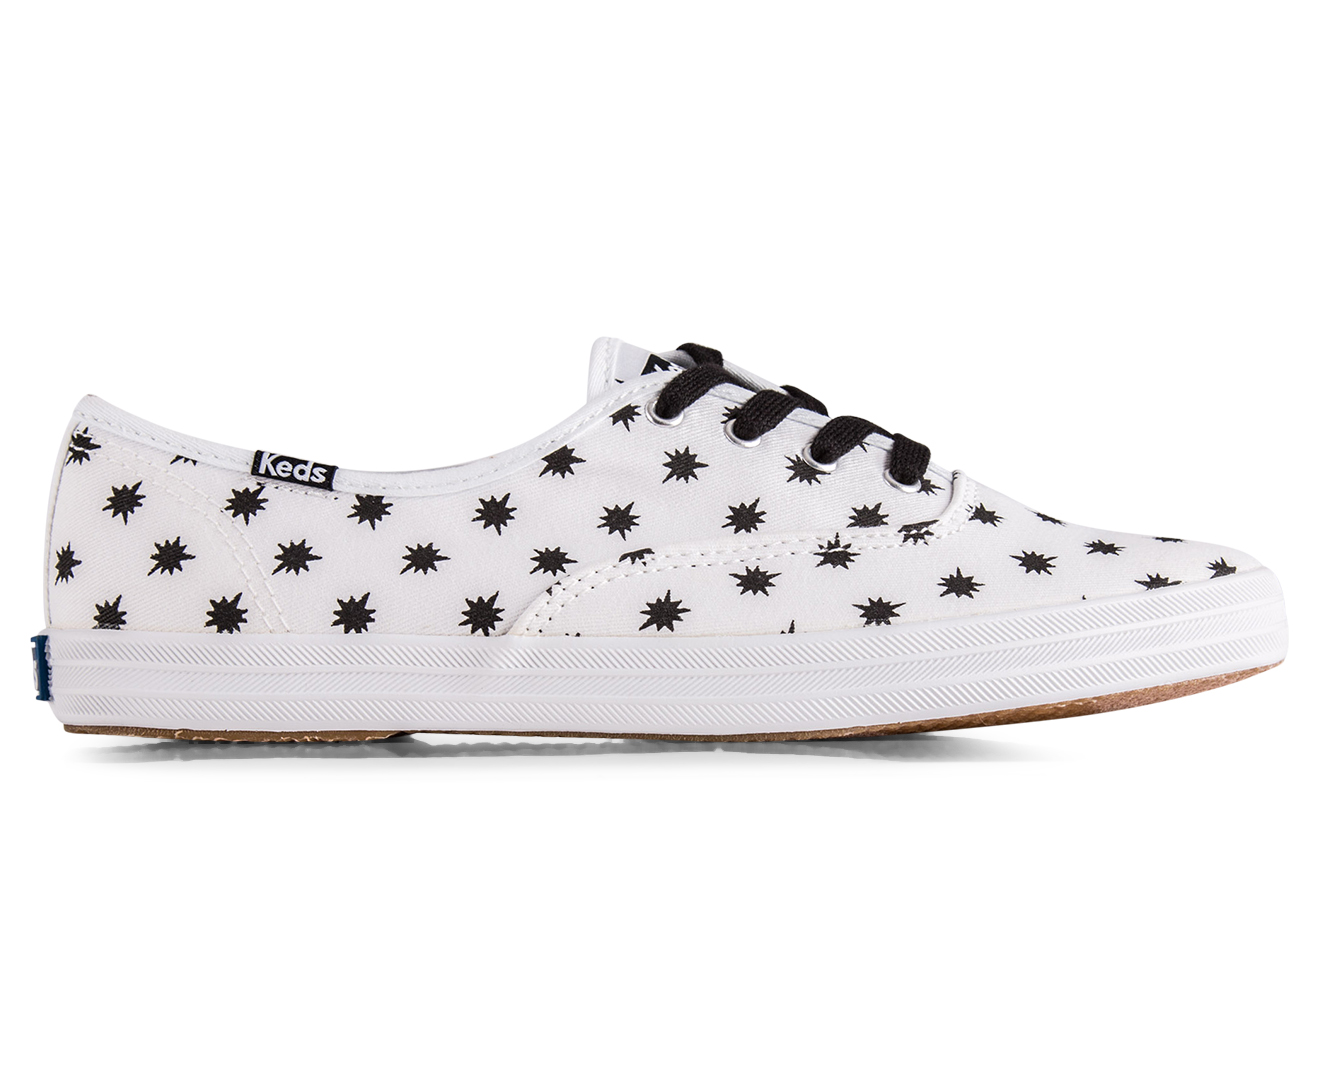 Keds Women's Cheetah Starburst Shoe - White | Catch.com.au